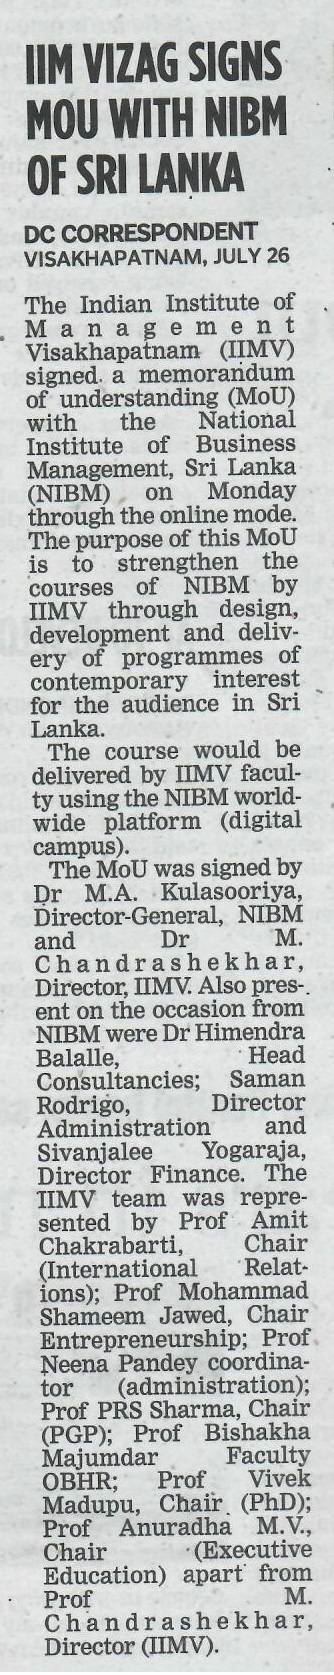 IIMV Vizag signs MoU with Lankan institute - 27.07.2021